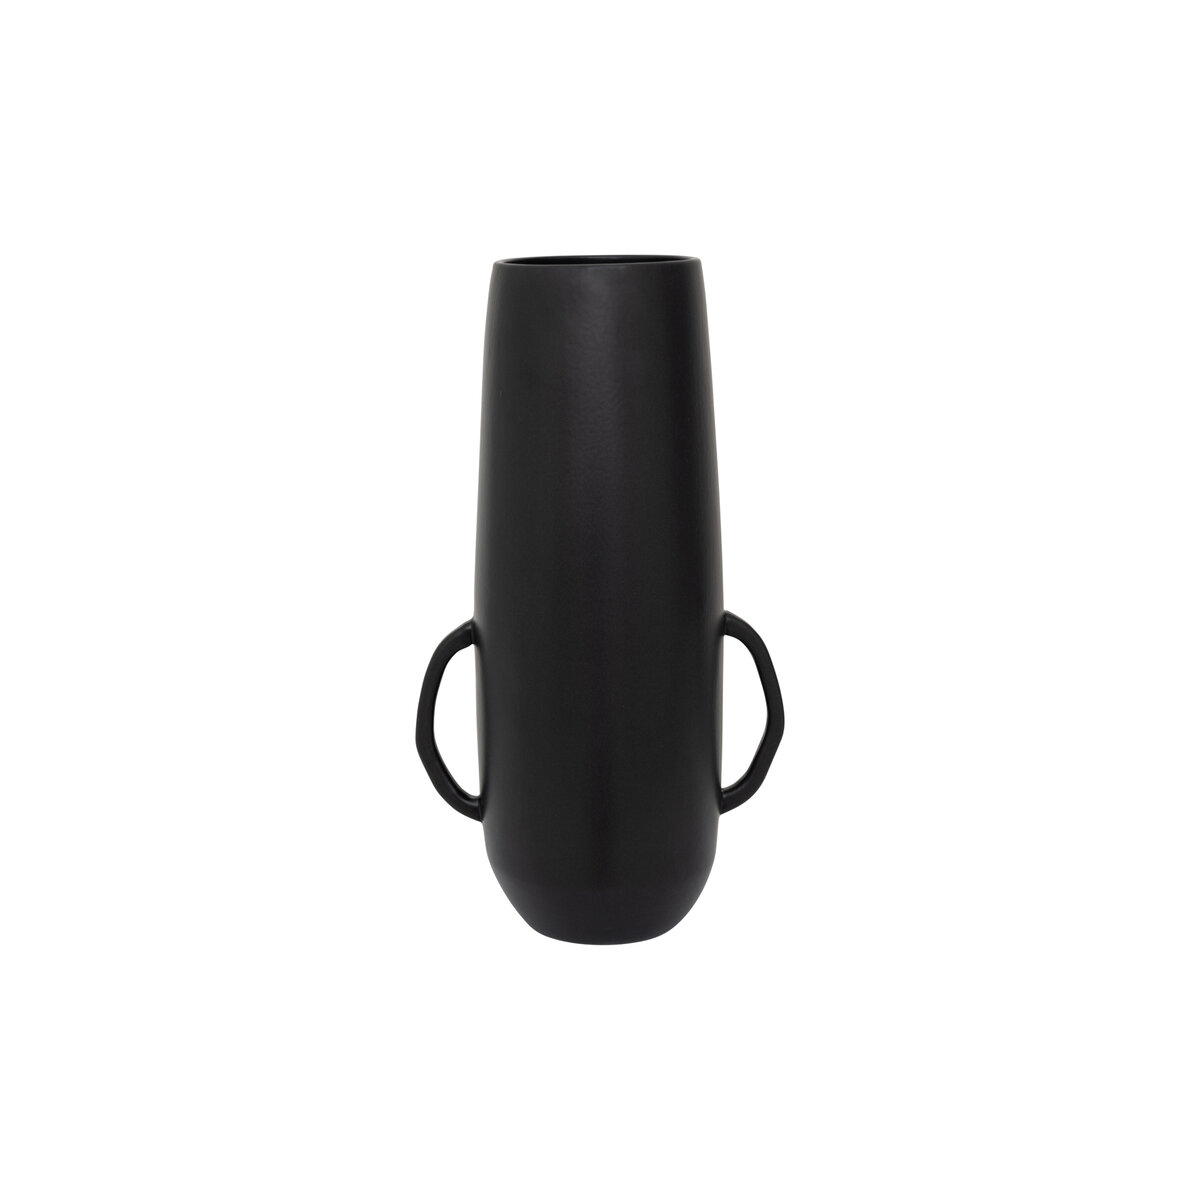 Calla - Earthenware vase